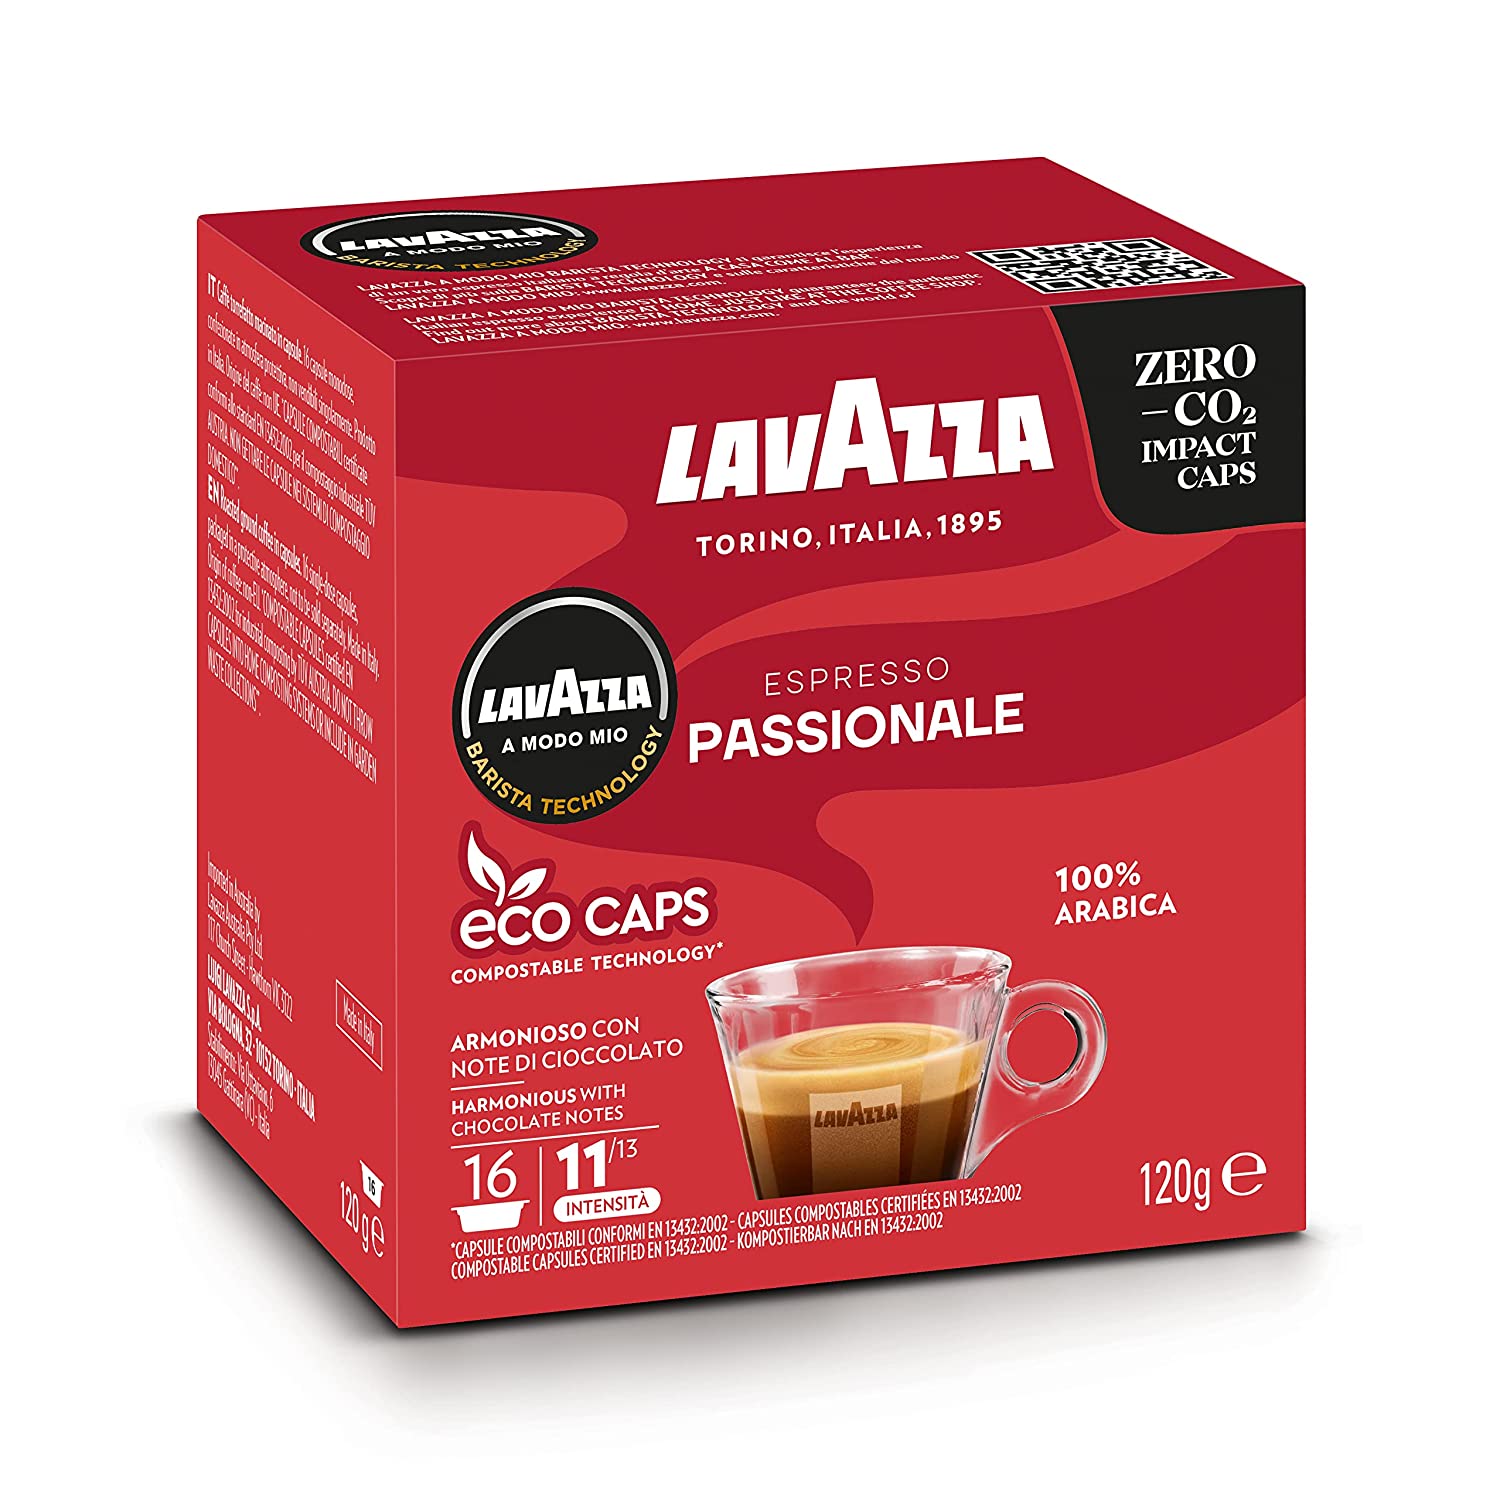 Lavazza A Modo Mio, Espresso Passionale, Kaffee, Kaffeekapseln, 16 Kapseln, Eco Caps